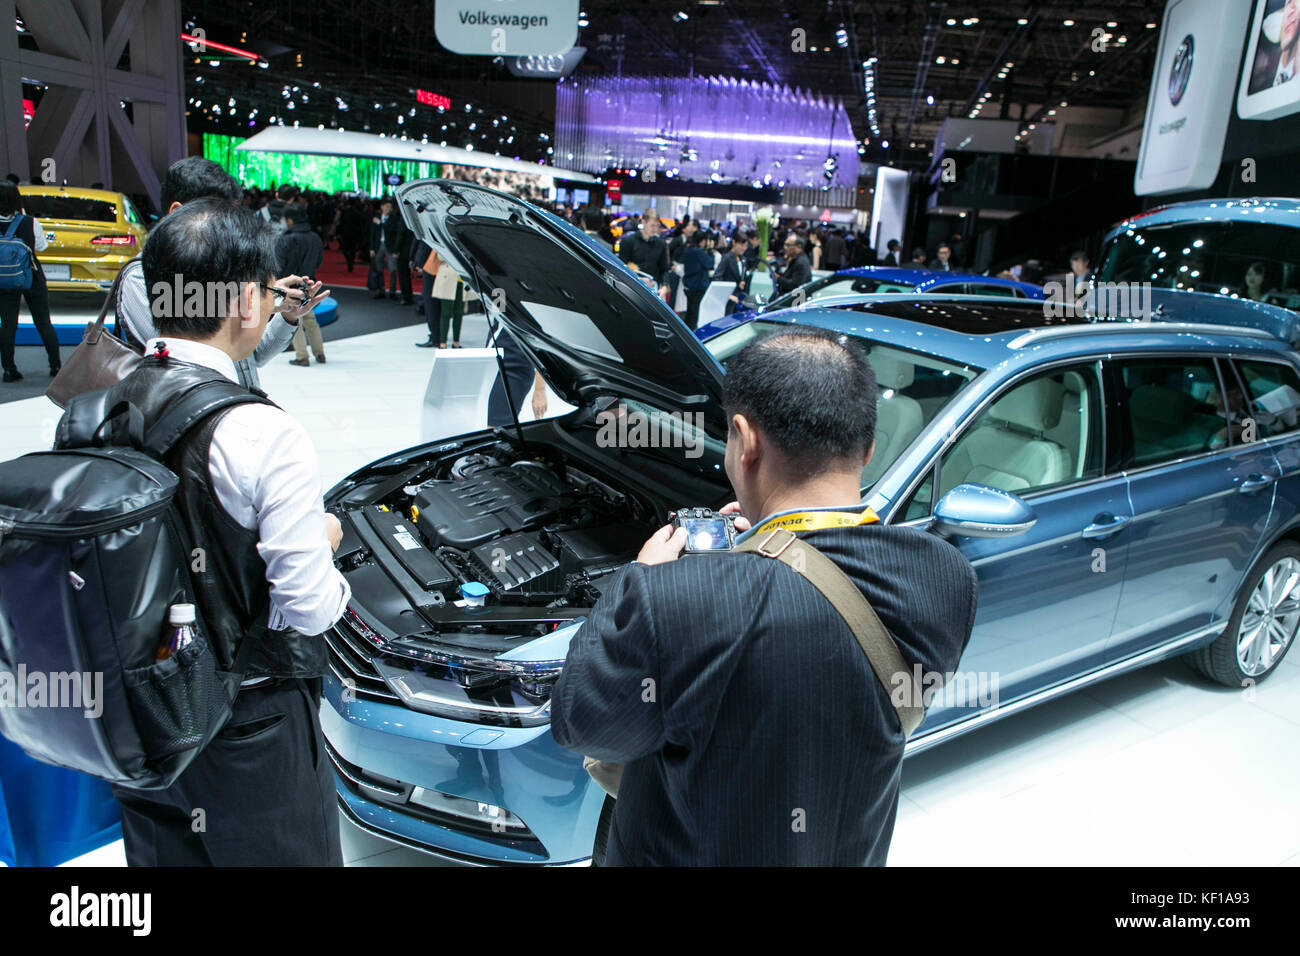 Volkswagen presents its new car models at 45th Tokyo Motor Show. Credit: Yuichiro Tashiro /Alamy Live News Stock Photo